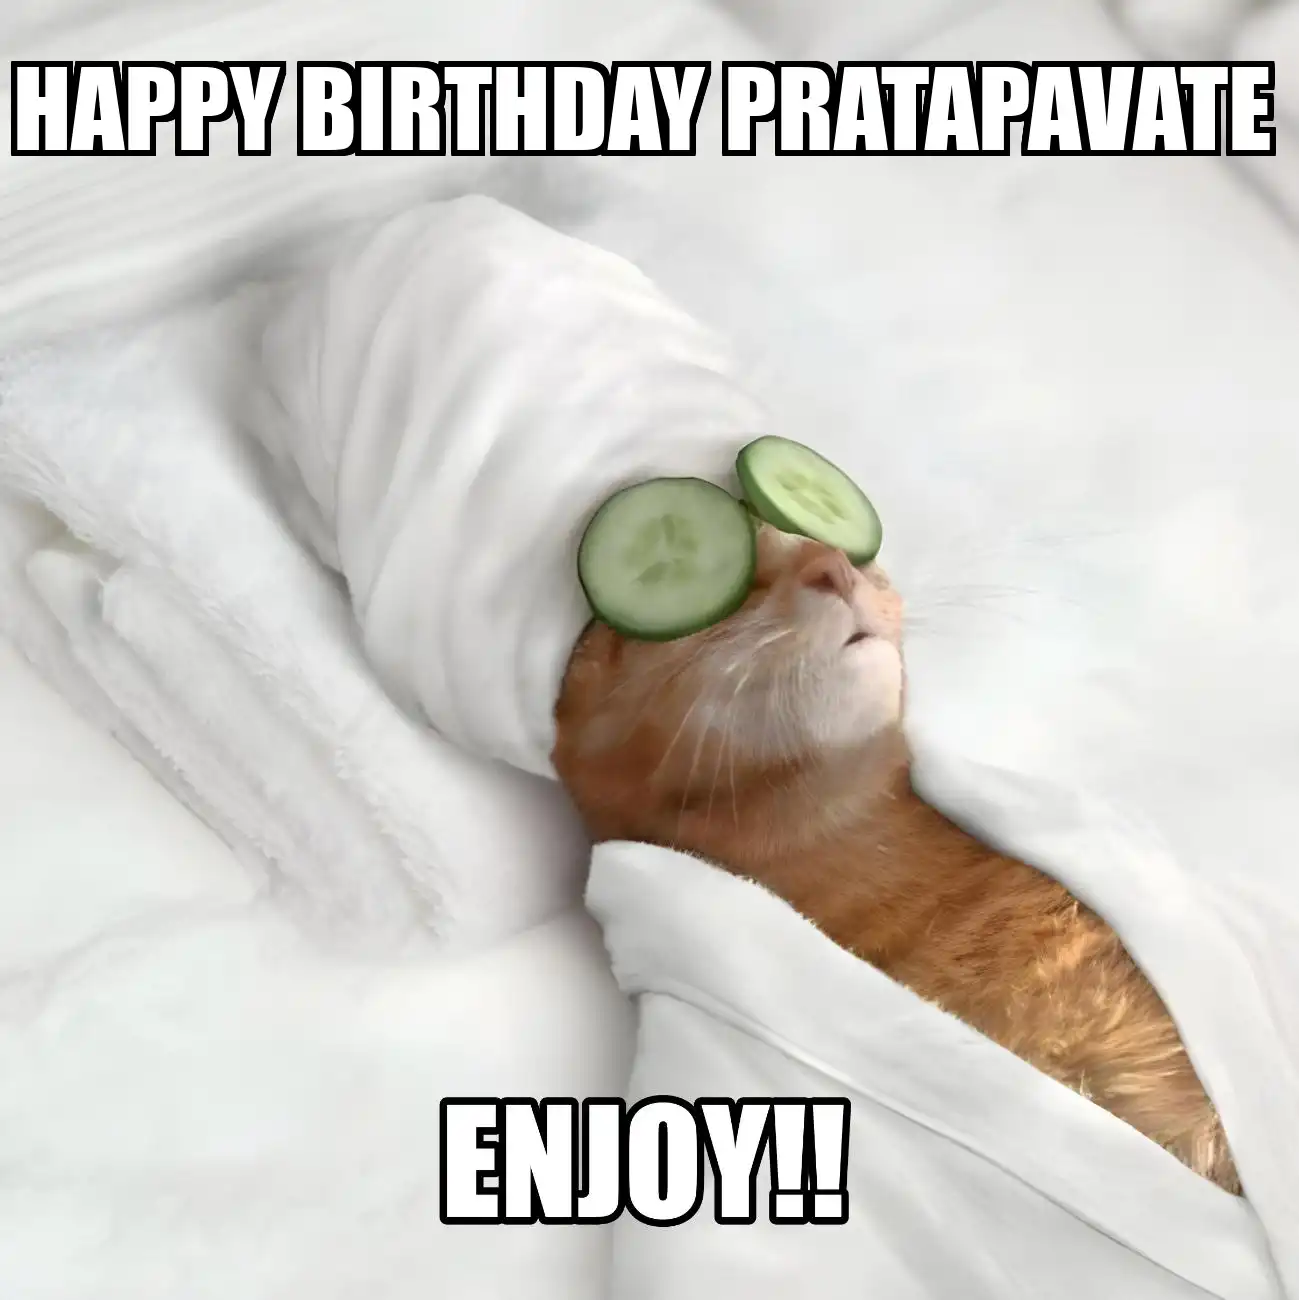 Happy Birthday Pratapavate Enjoy Cat Meme